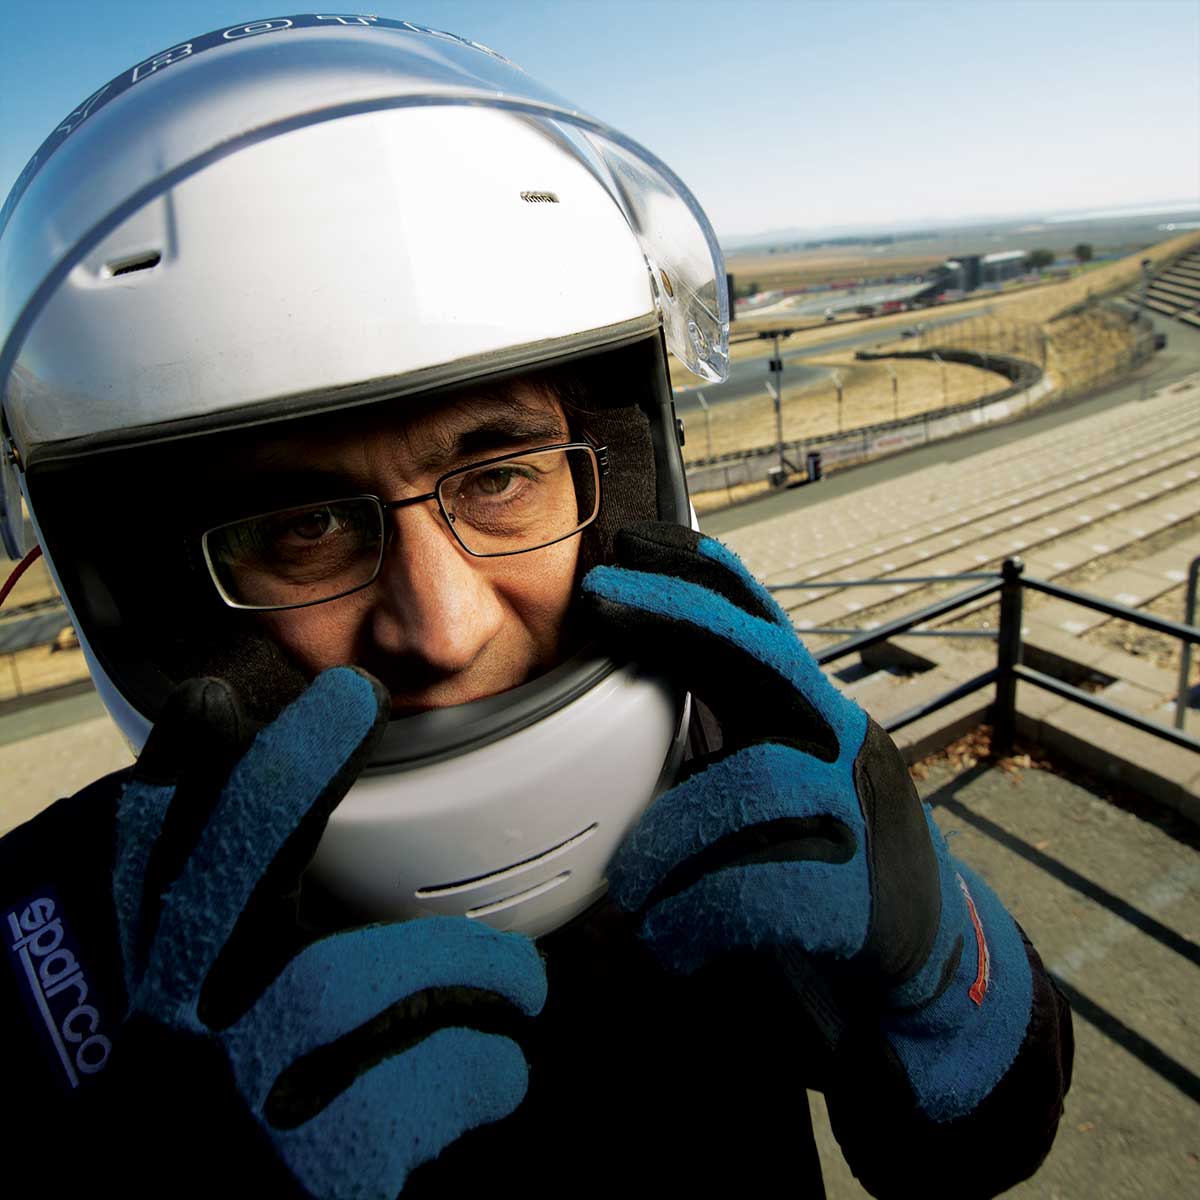 Ian Korf at the racetrack